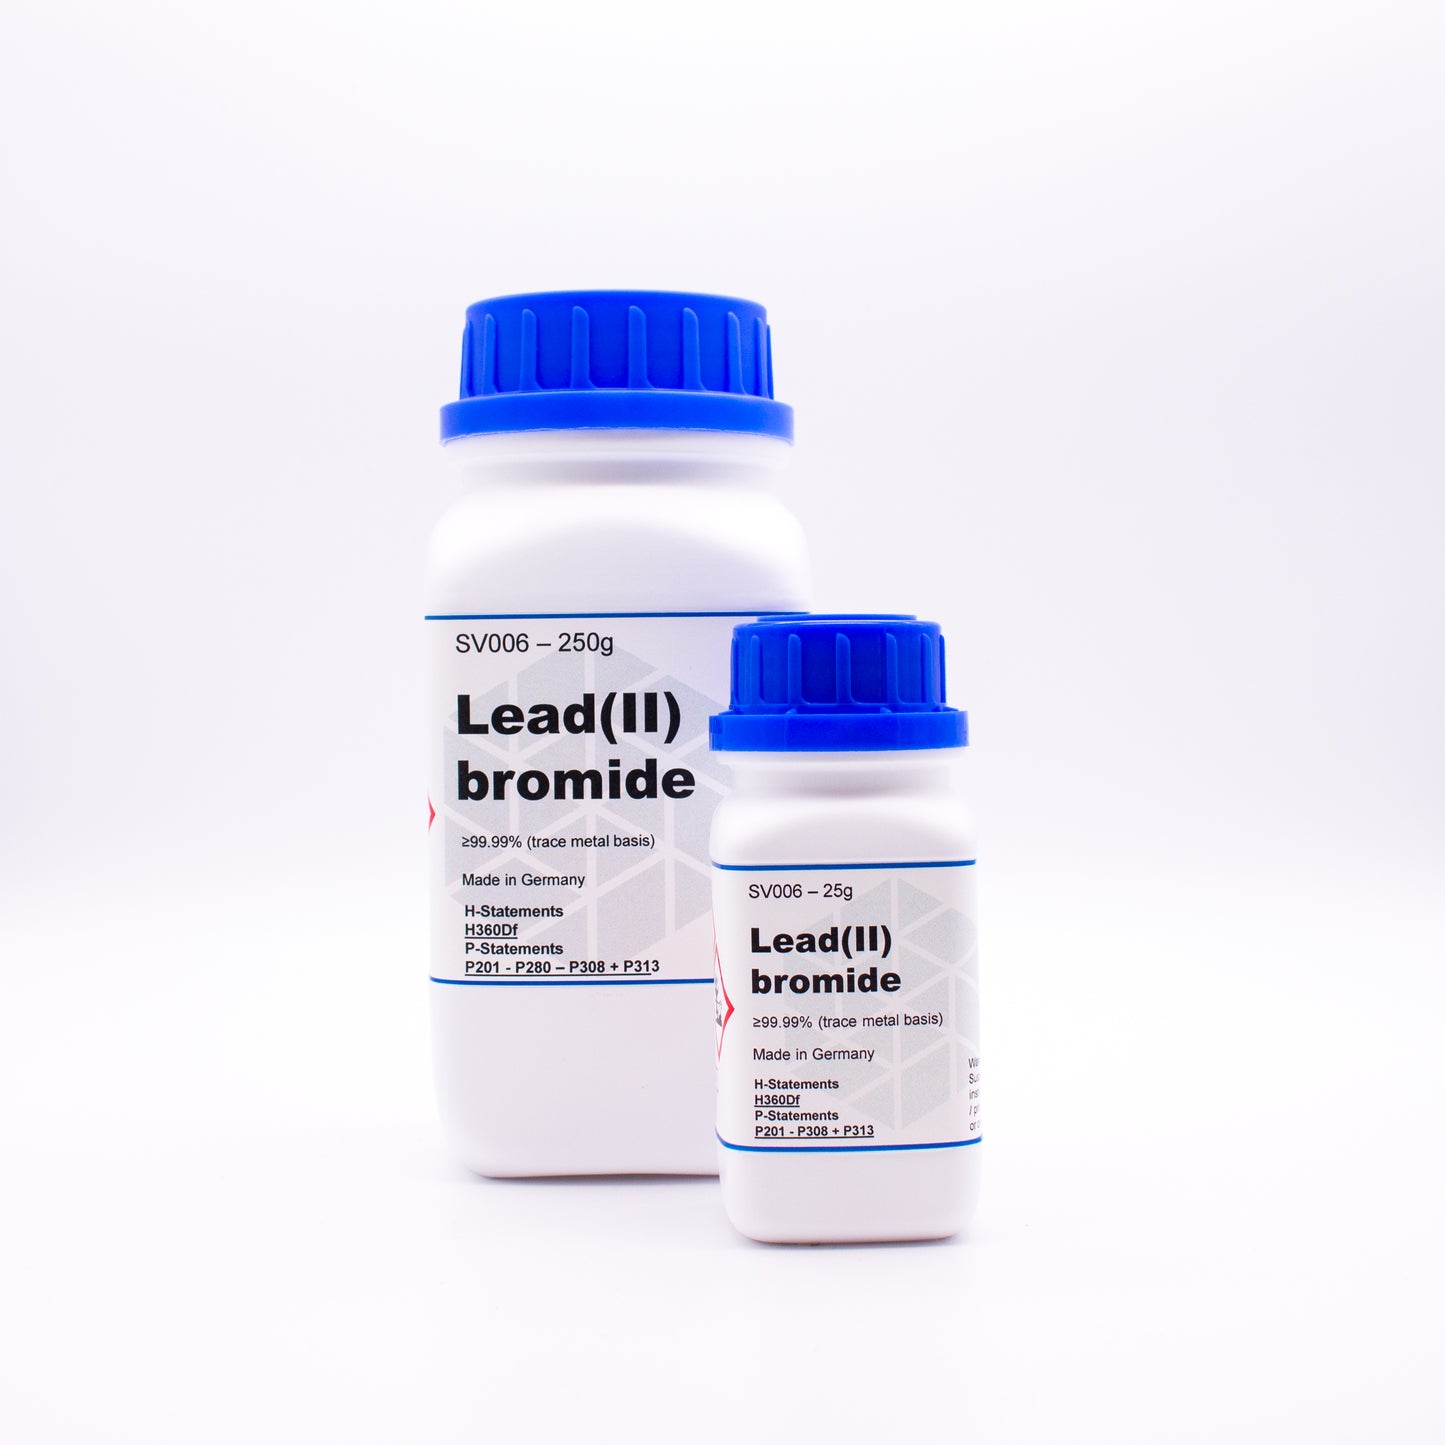 Lead bromide >99.99%, CAS 10031-22-8